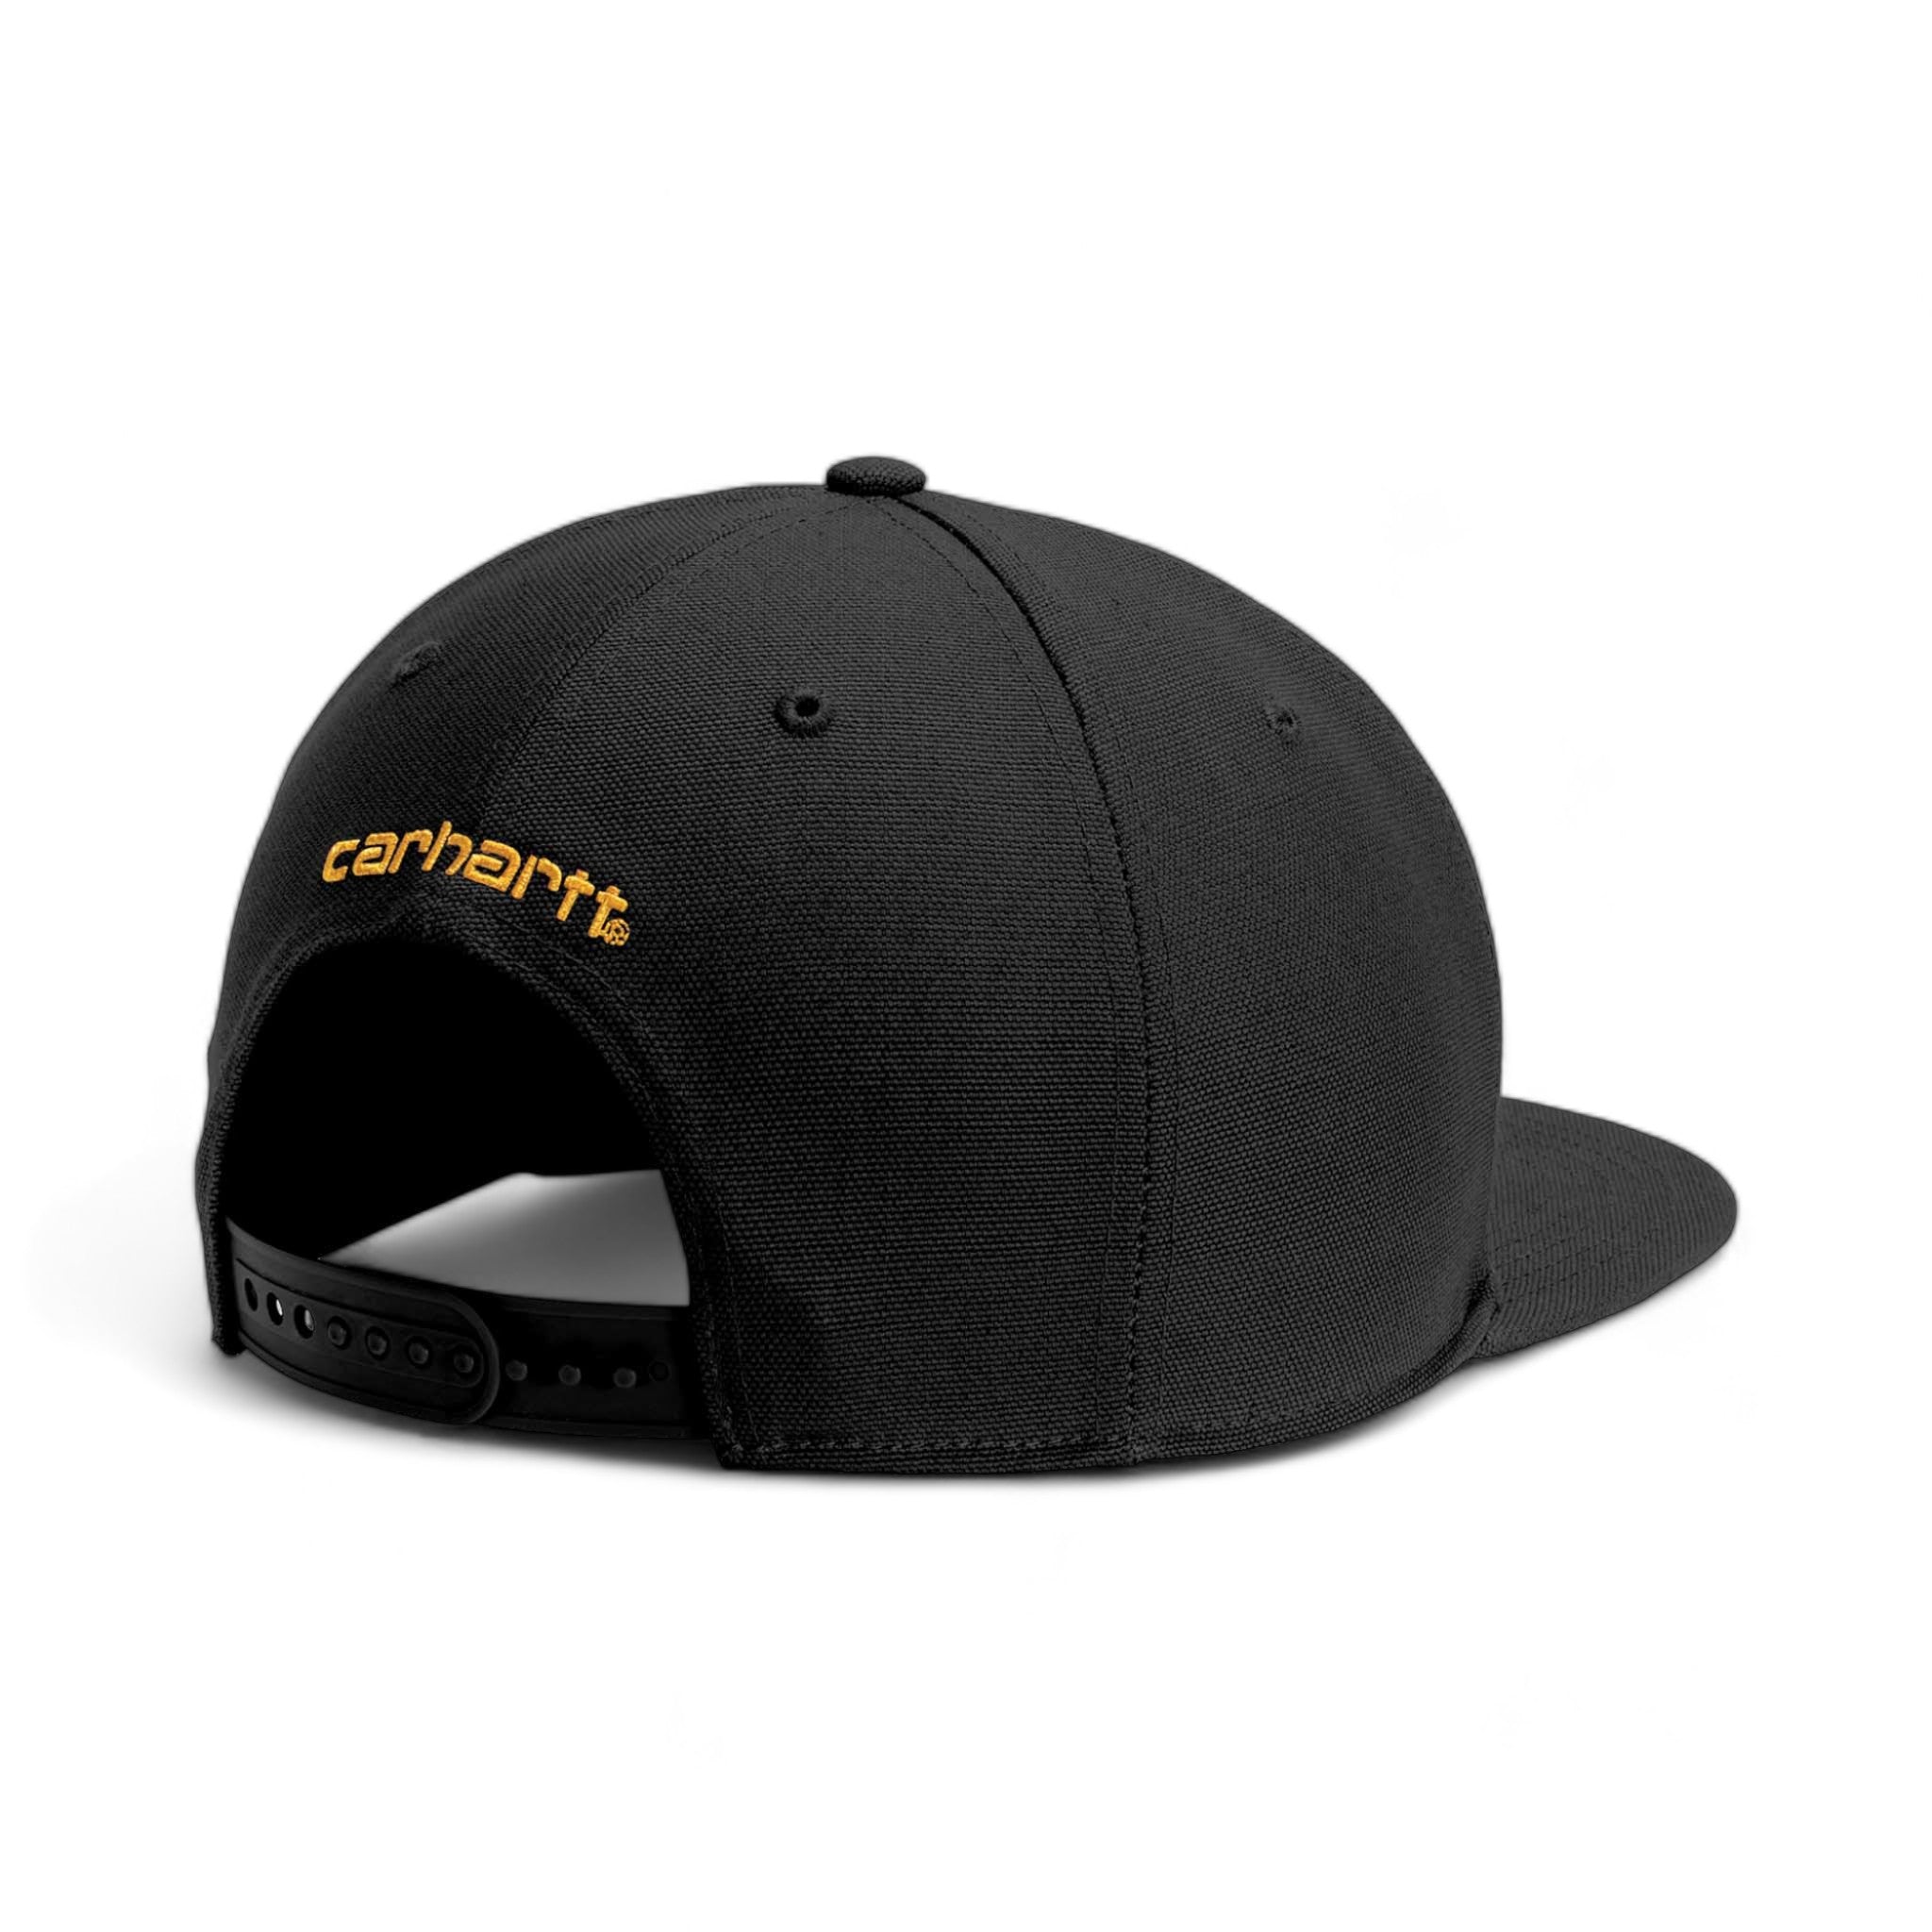 Back view of Carthartt CT101604 custom hat in black